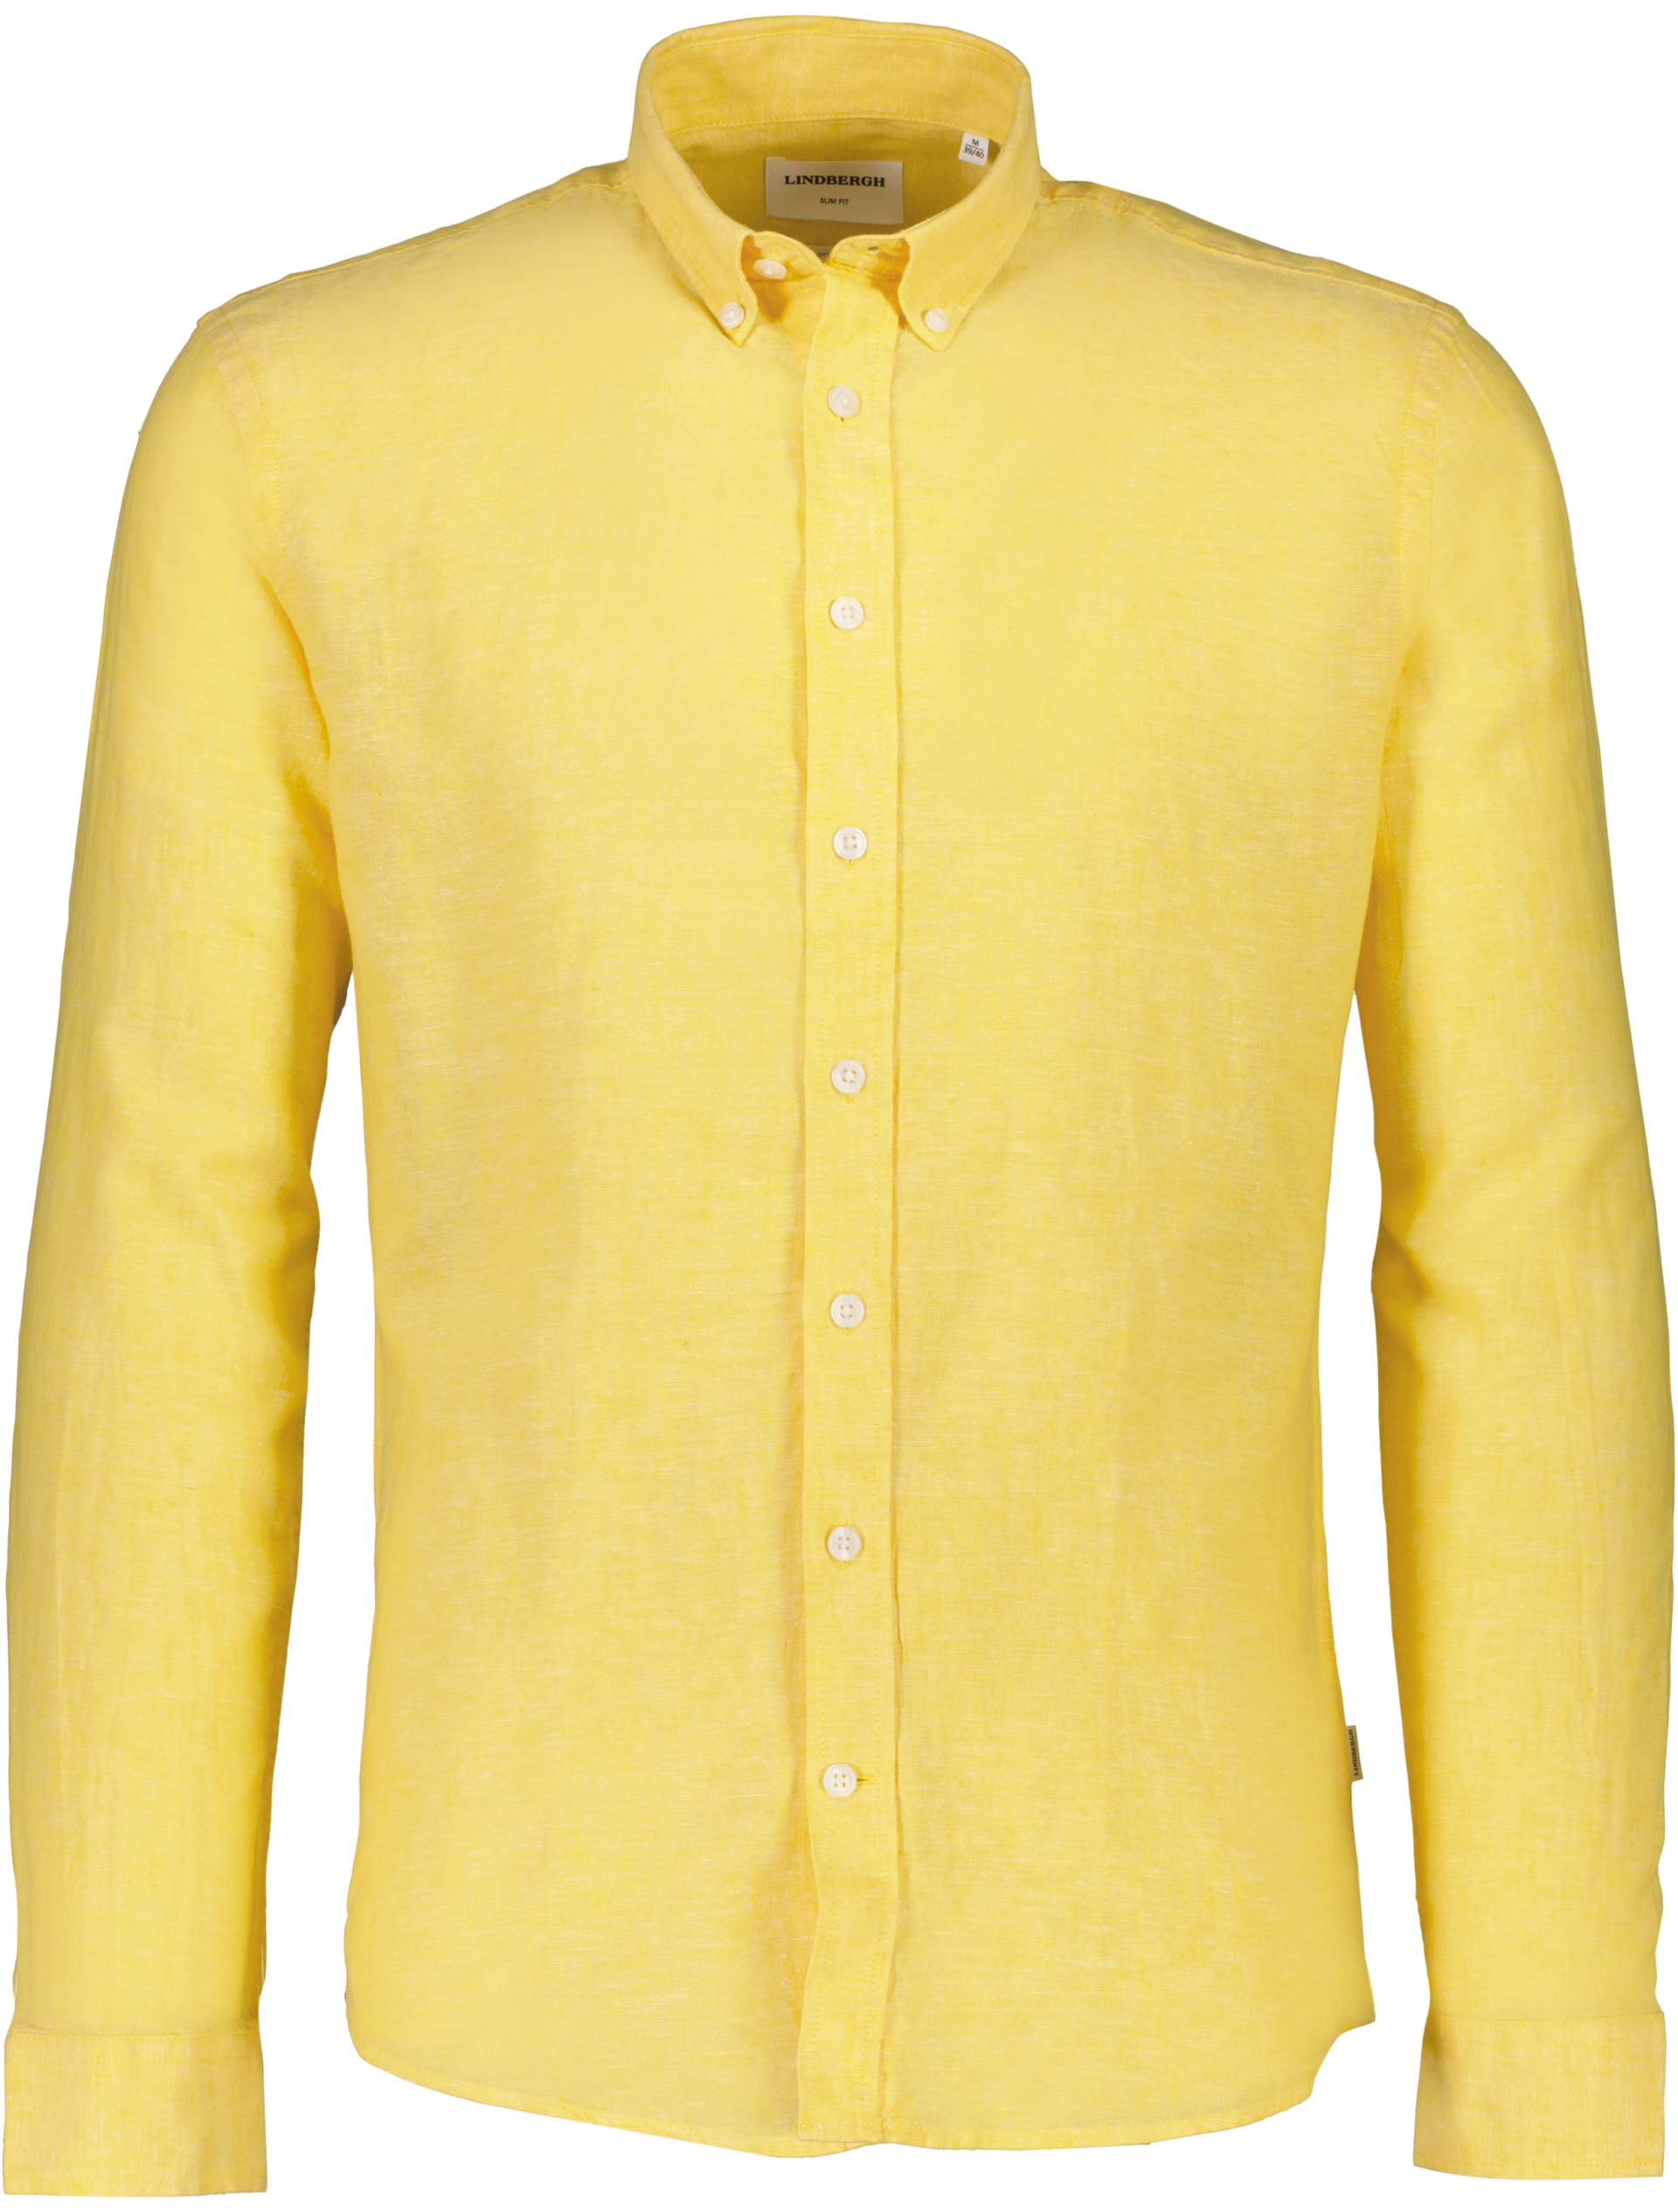 Lindbergh Leinenhemd gelb / mid yellow